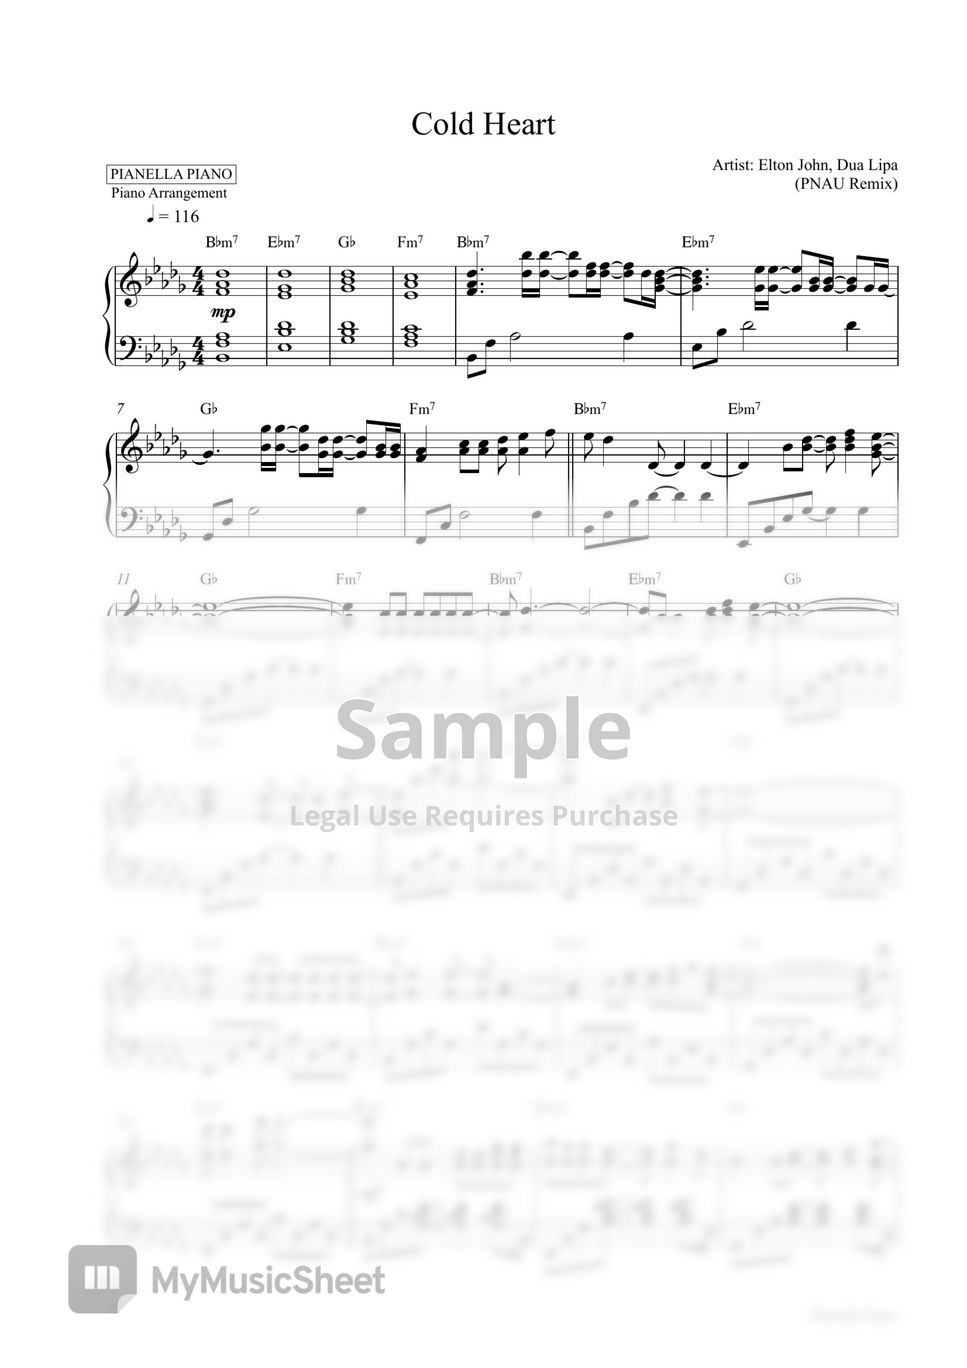 Elton John, Dua Lipa - Cold Heart (Piano Sheet) by Pianella Piano